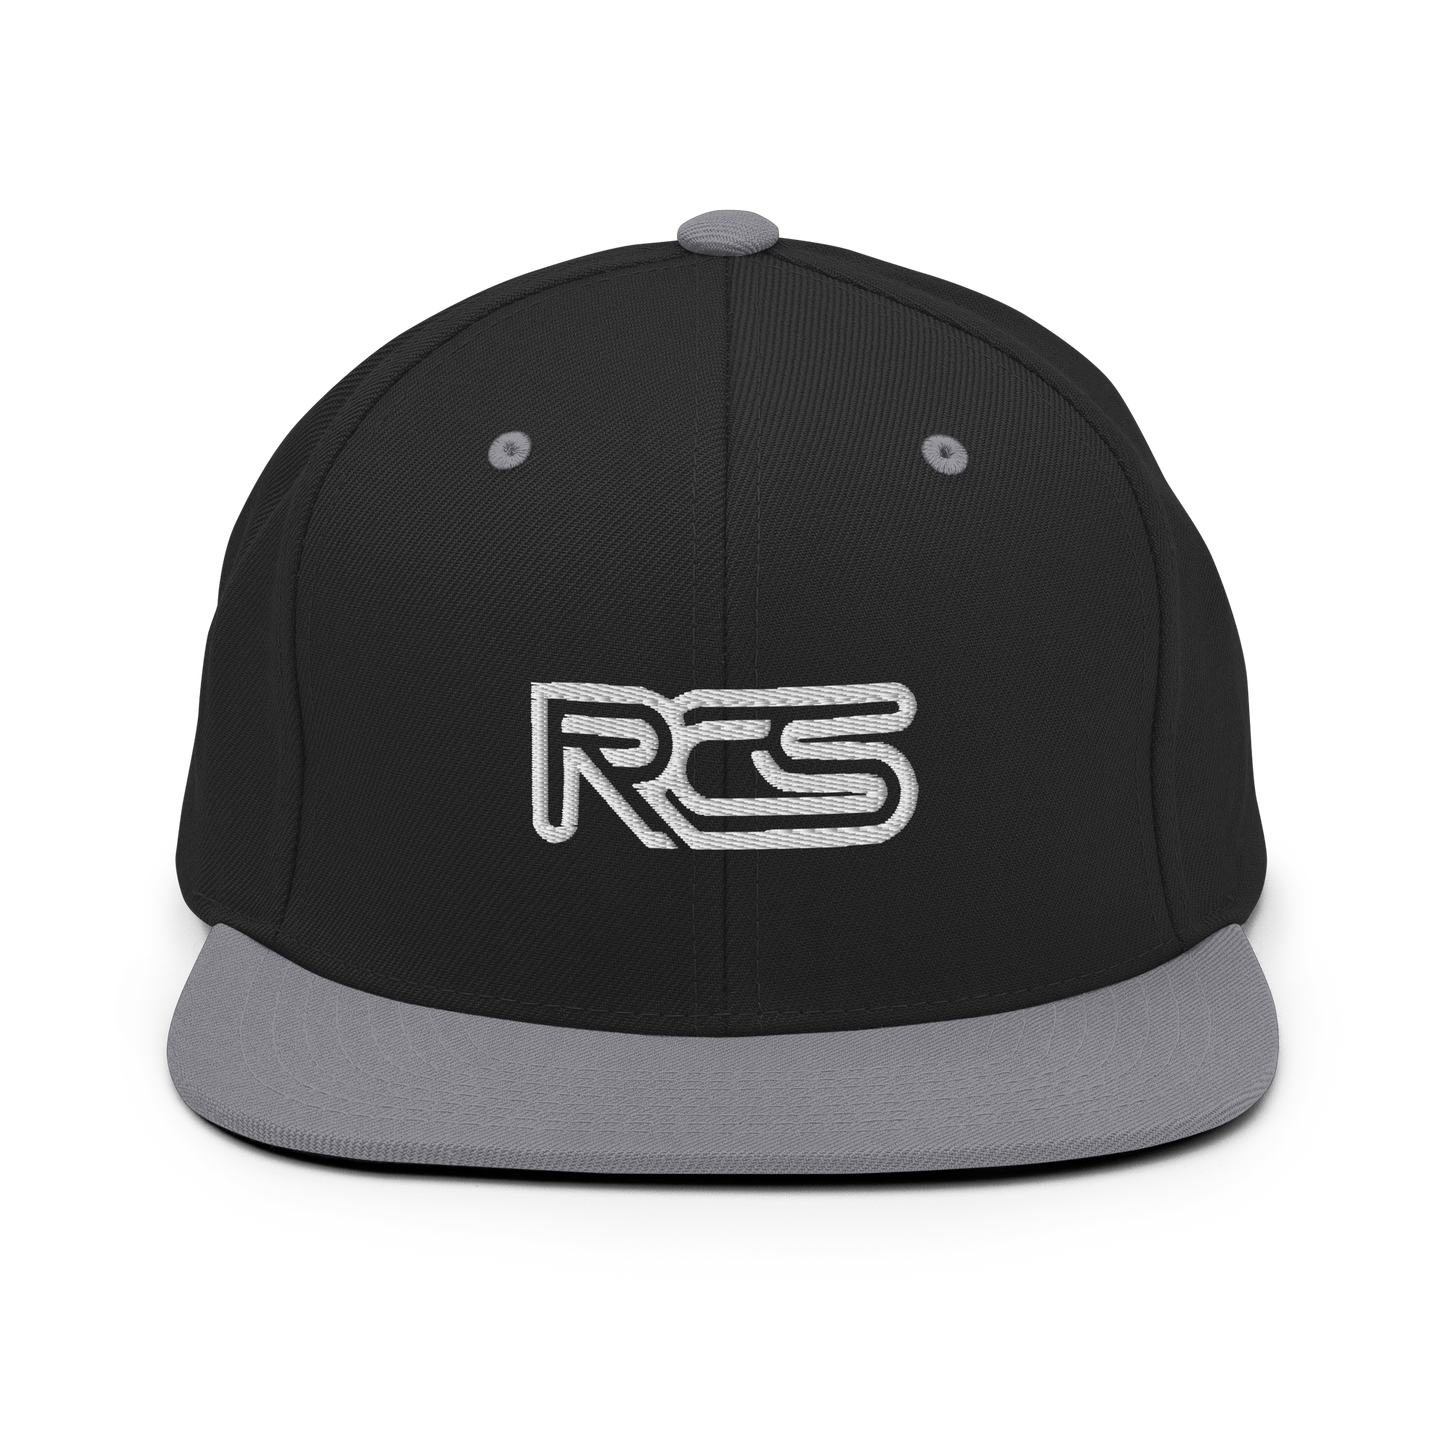 RCS White Logo Snapback - Redcon Brand 